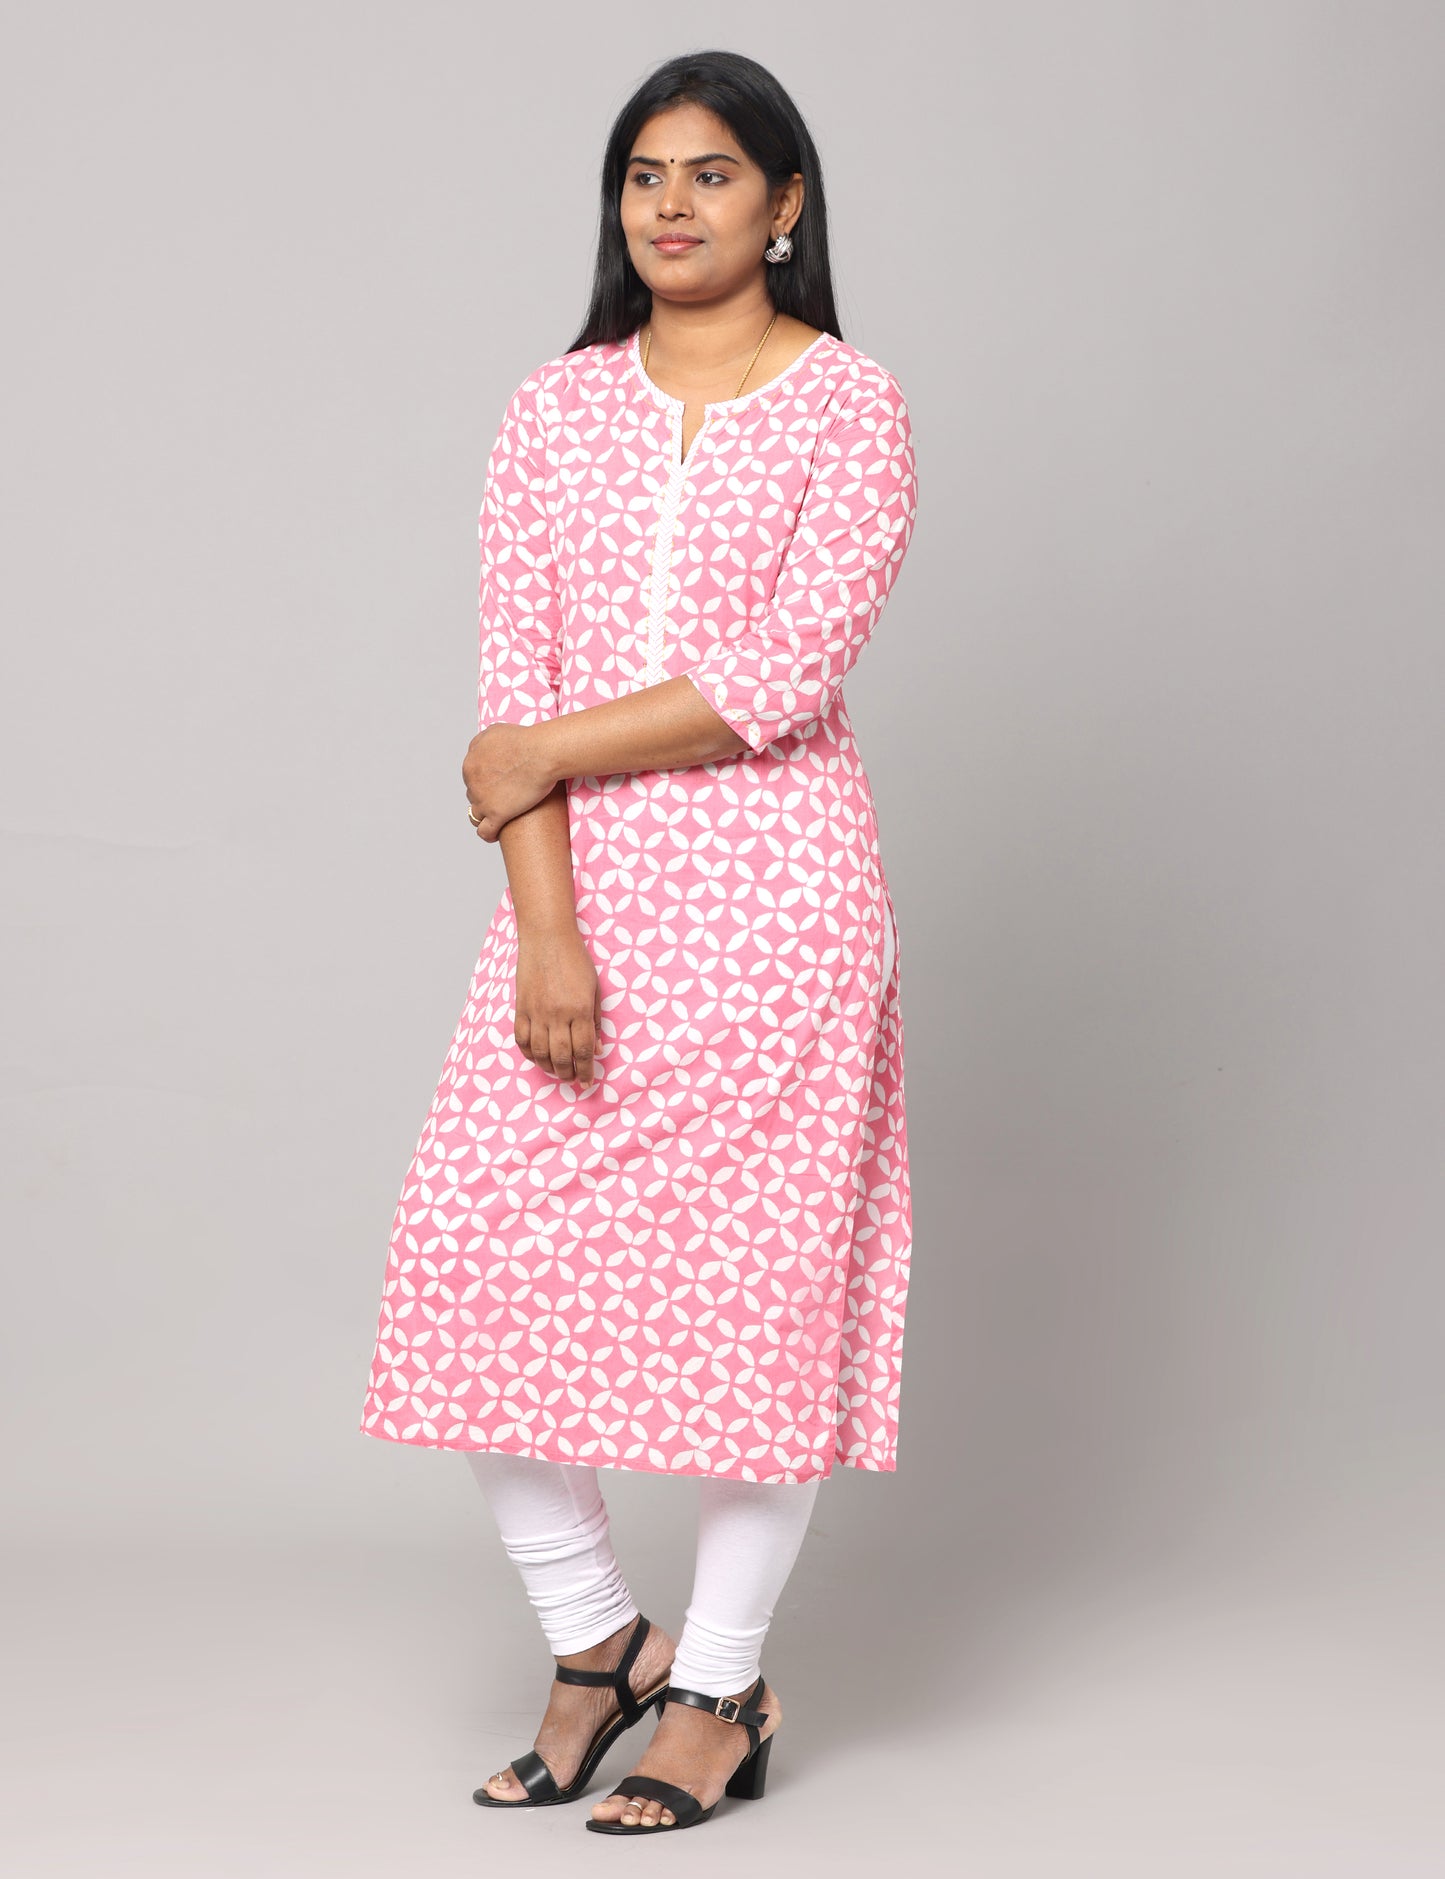 Block Printed cotton kurti - Pink and white